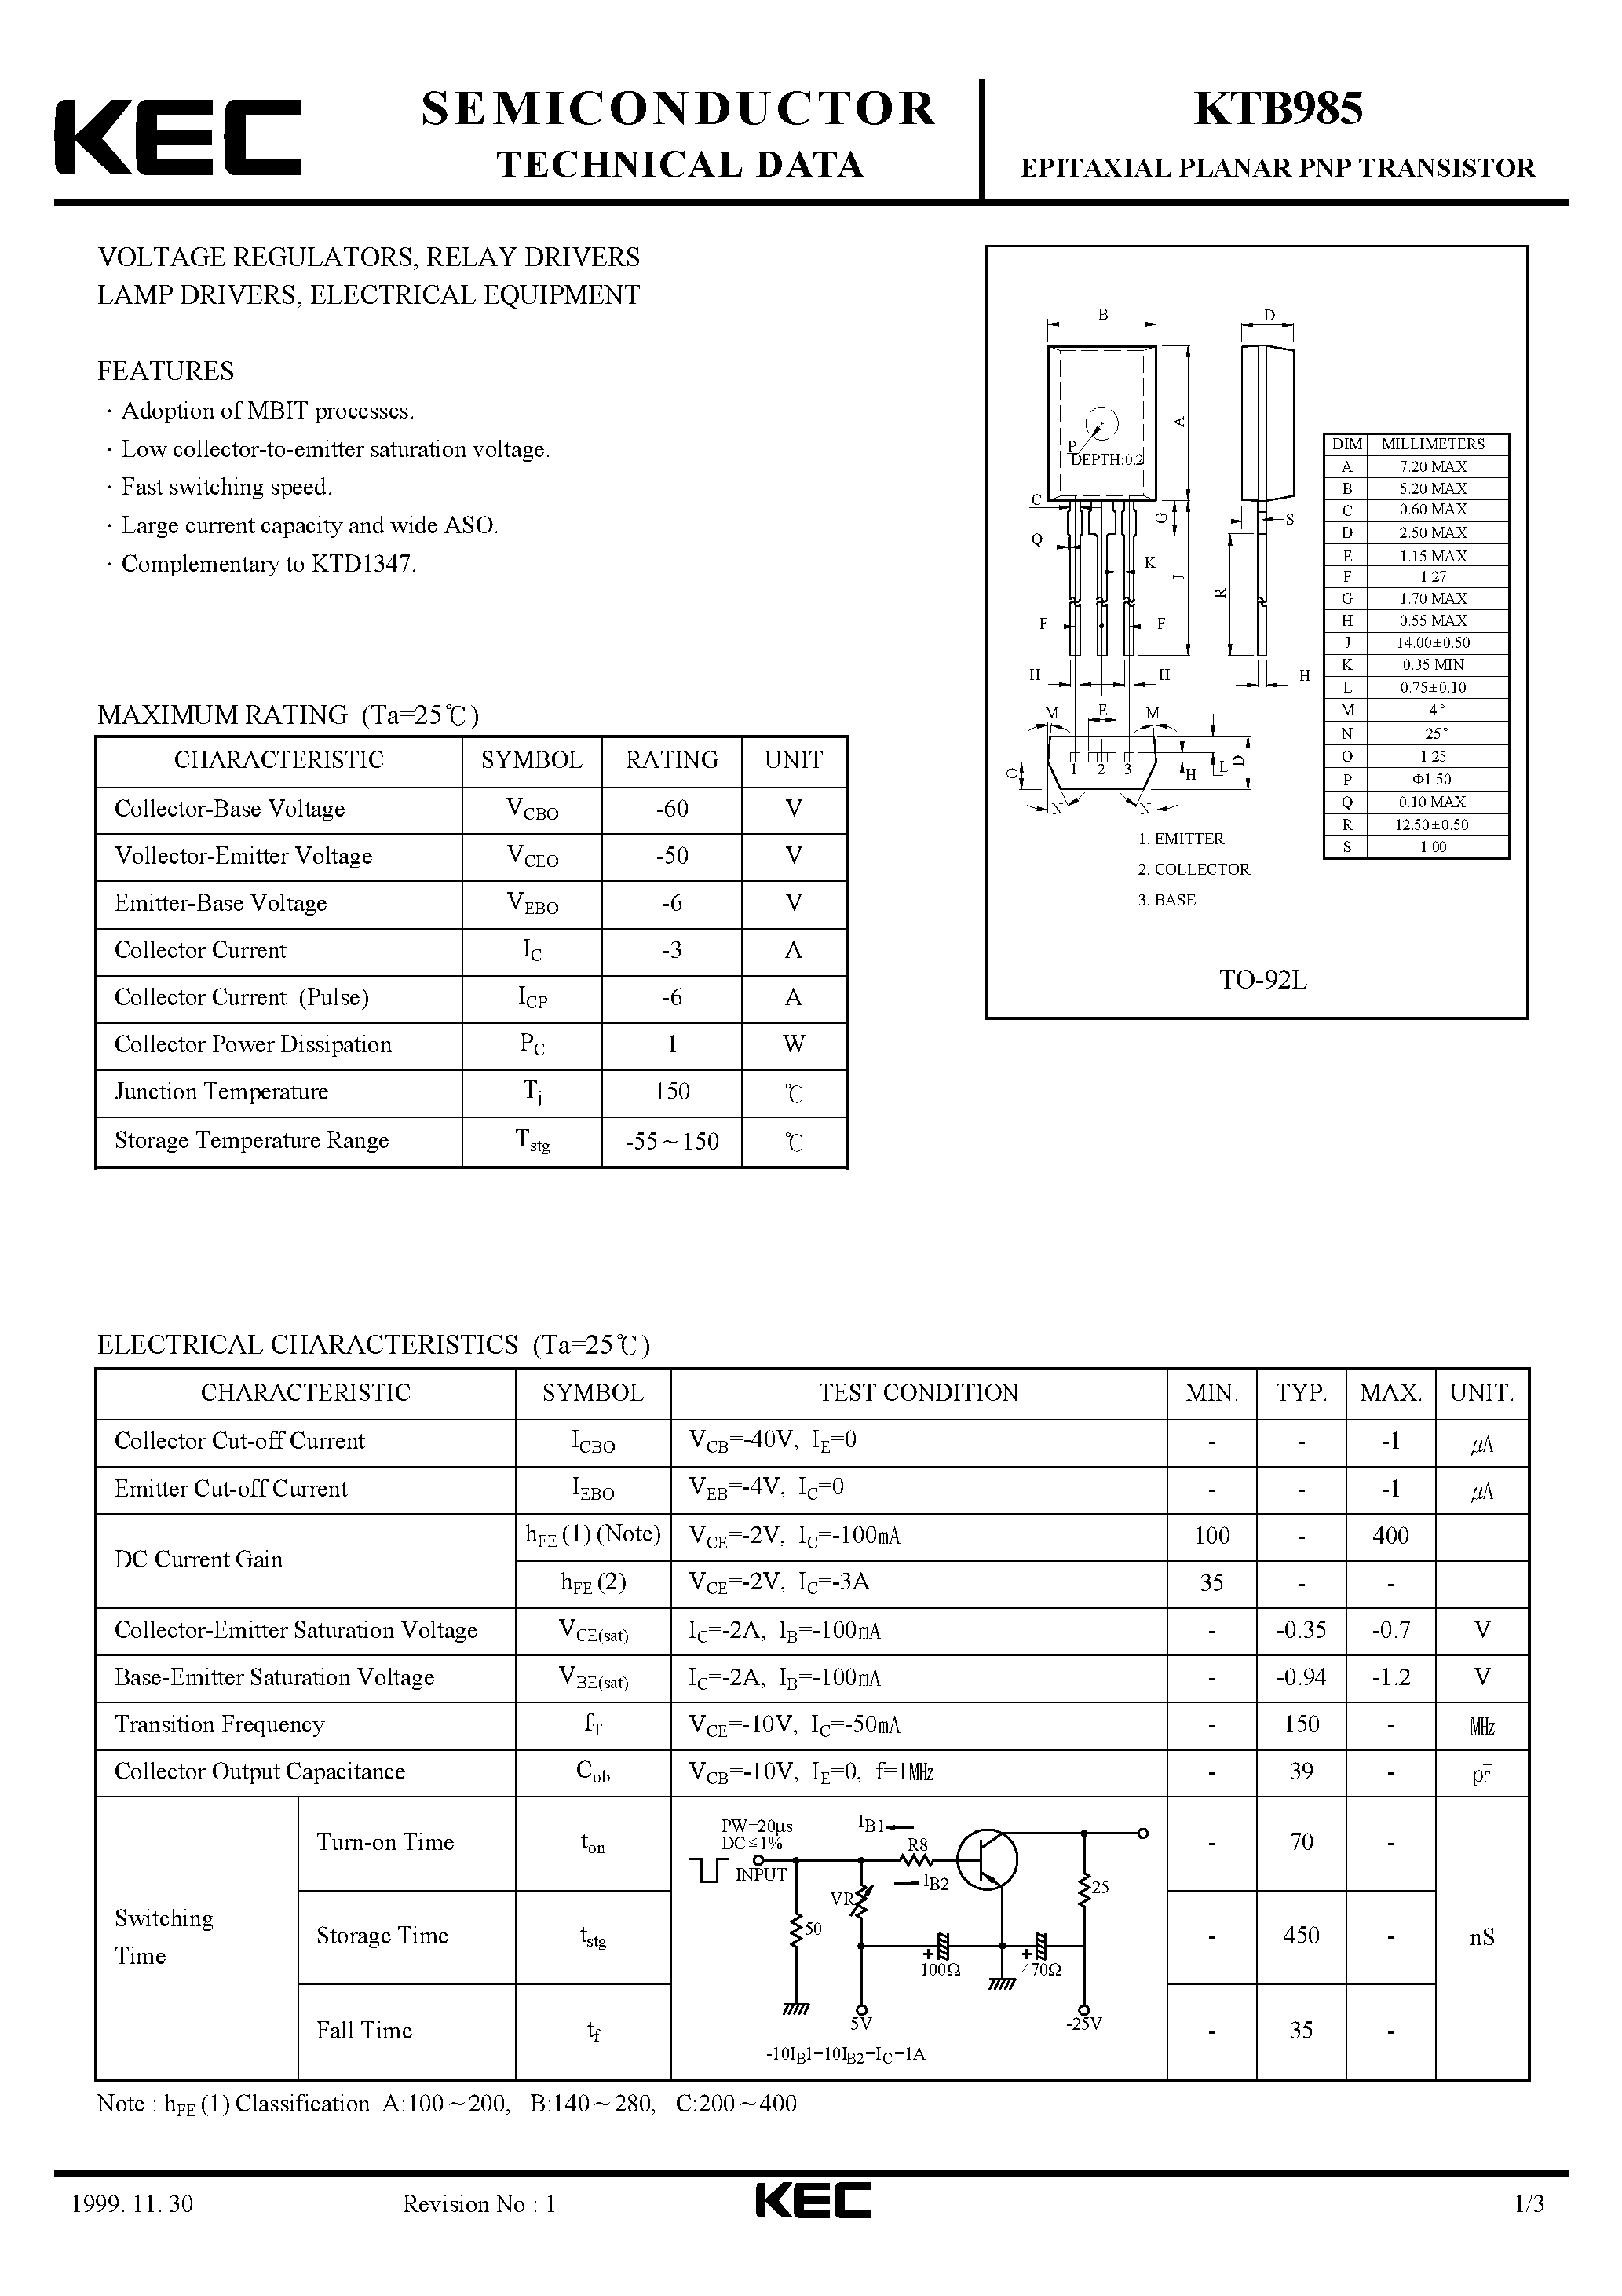 Даташит KTB985 - EPITAXIAL PLANAR PNP TRANSISTOR (VOLTAGE REGULATOR RELAY DRIVERS LAMP DRIVER/ ELECTRICAL EQUIPMENT) страница 1